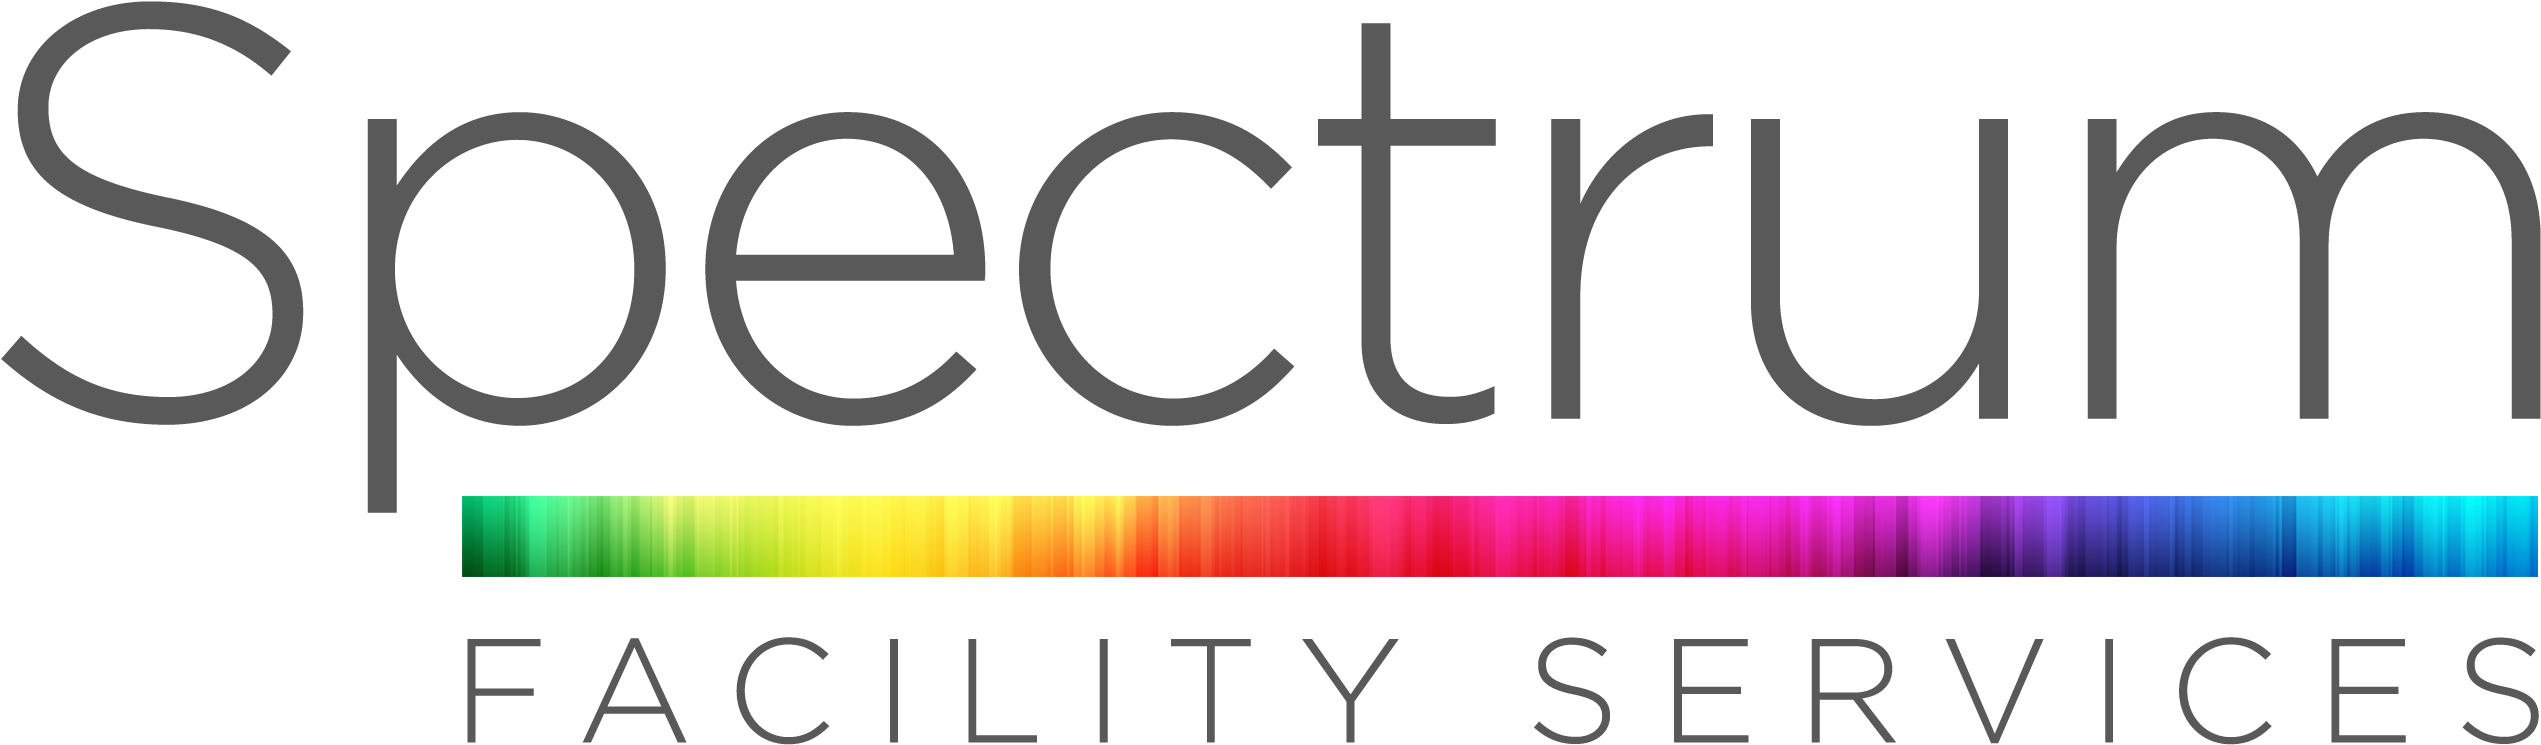 Spectrum Facility Services - Model Metrics, Hd Png Download